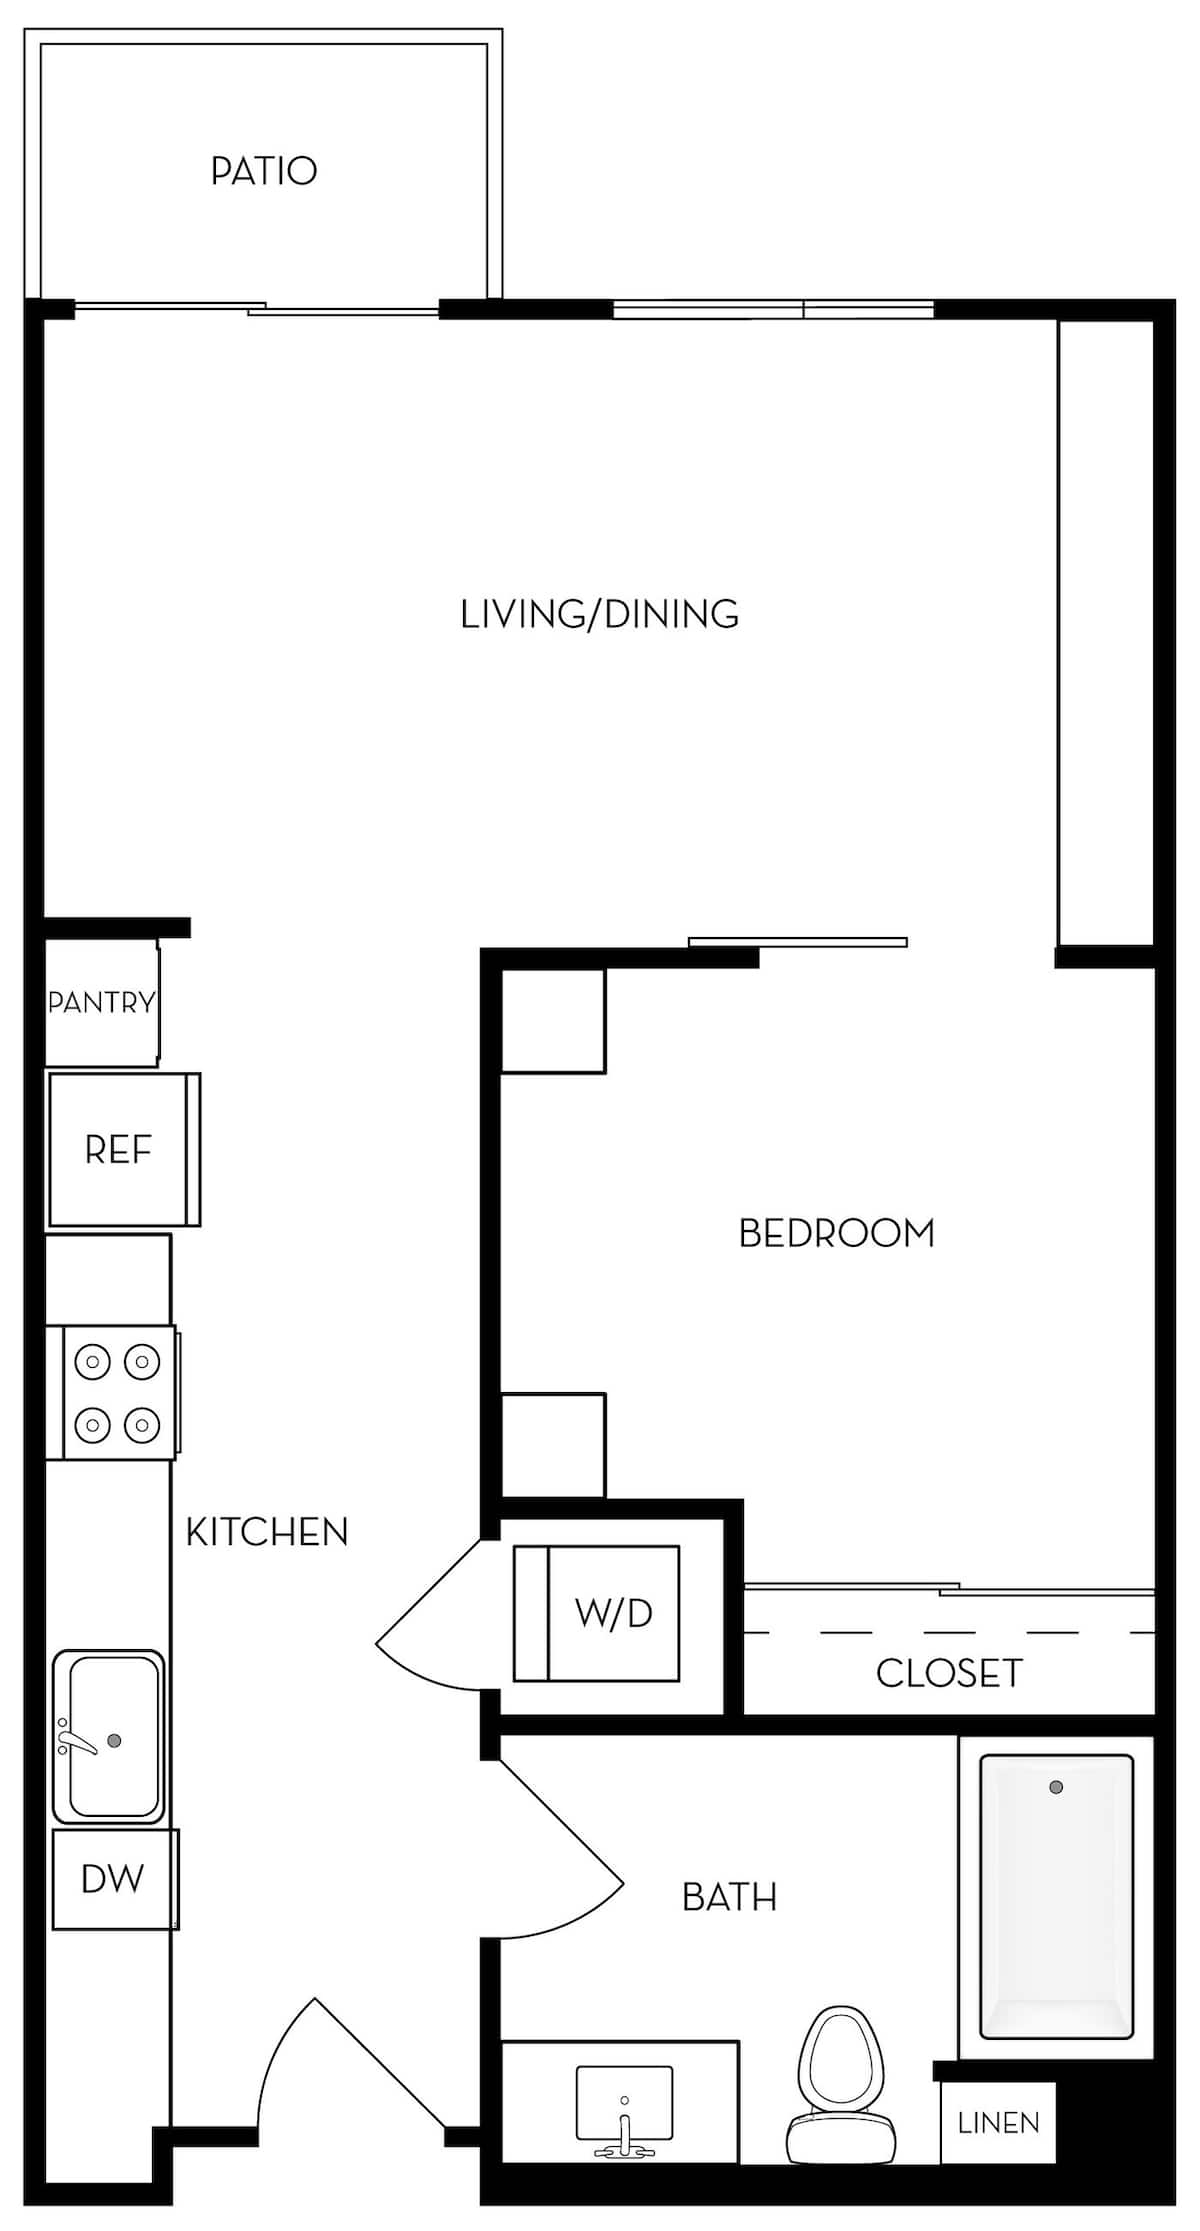 Floorplan diagram for E1h - Junior 1BR 1BA Euro Style Flat , showing 1 bedroom